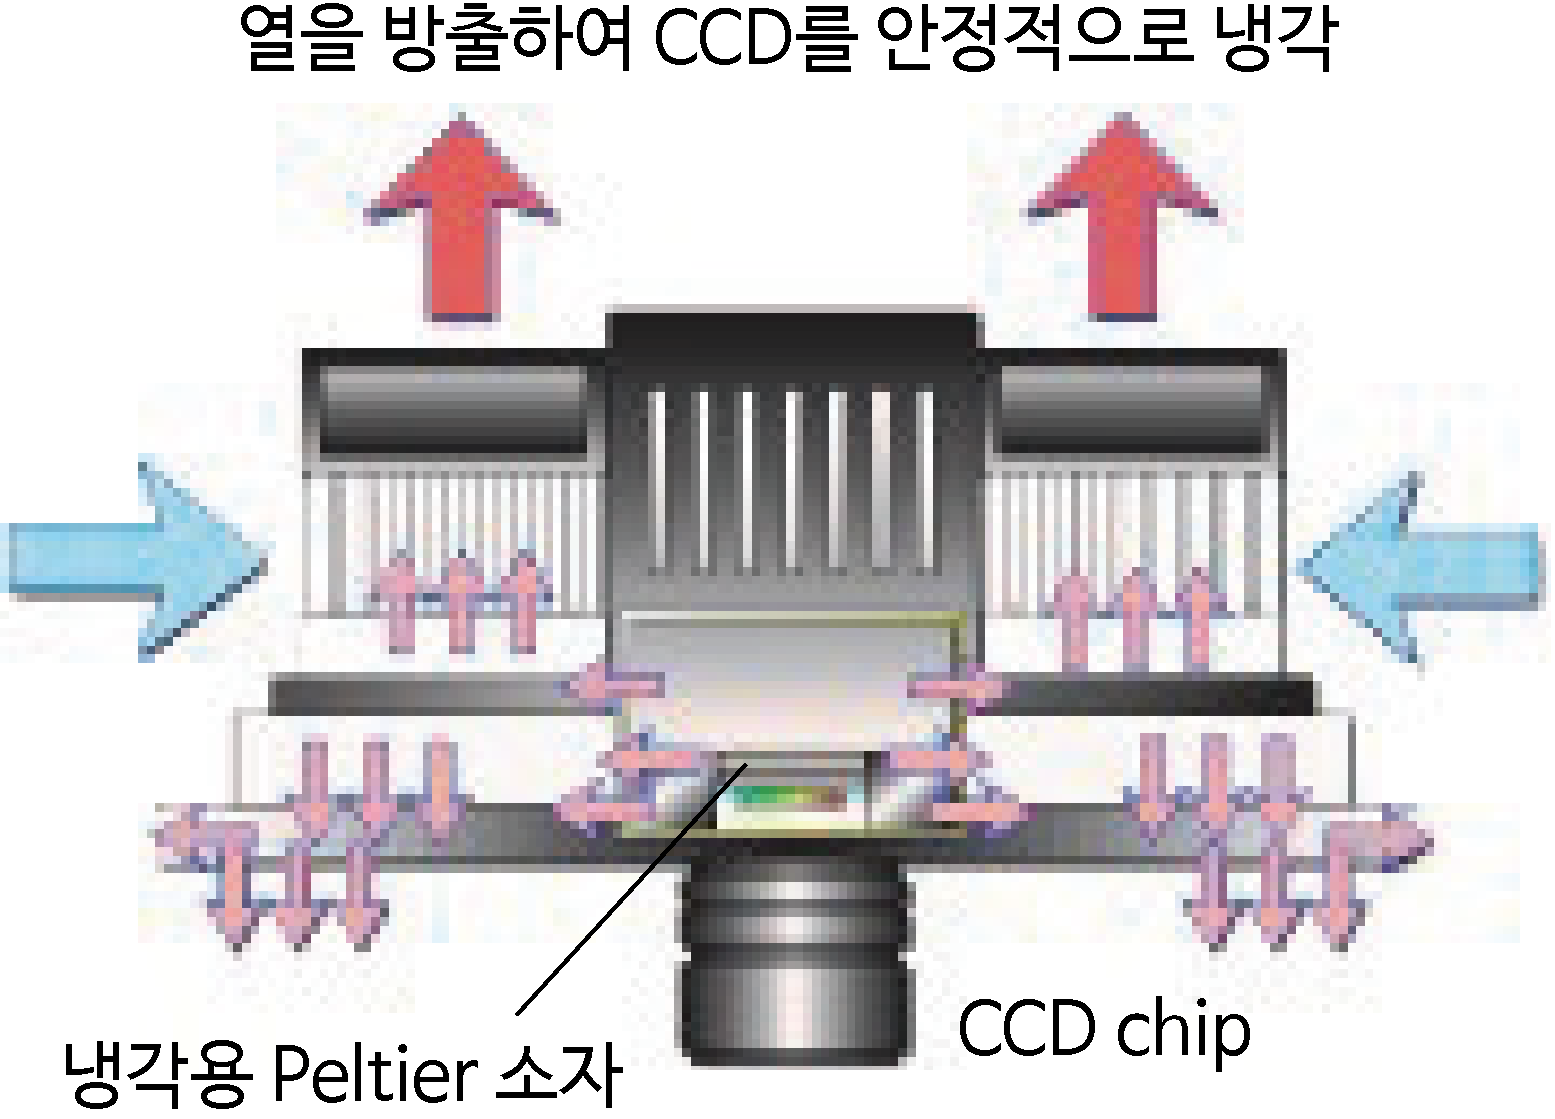 Cooled CCD camera